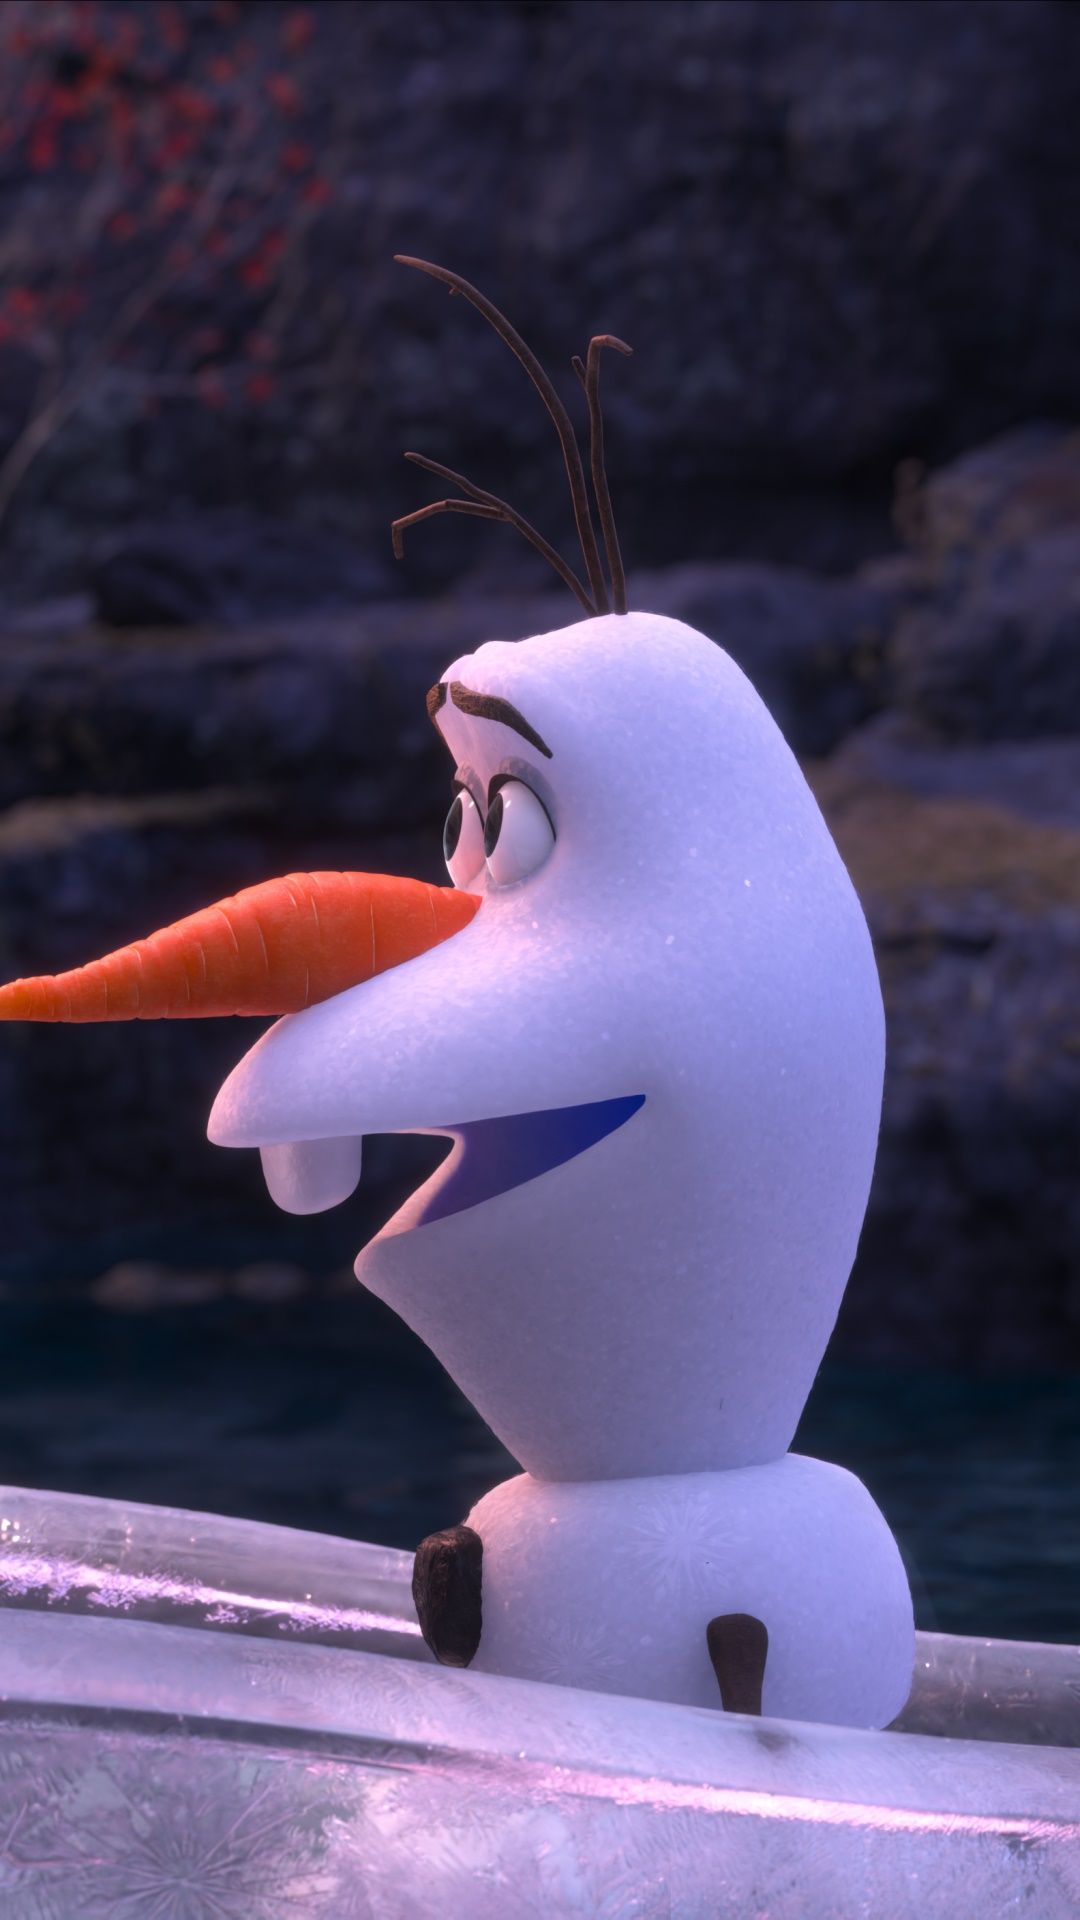 Wallpaper / Movie Frozen 2 Phone Wallpaper, Olaf (Frozen), 1080x1920 free download